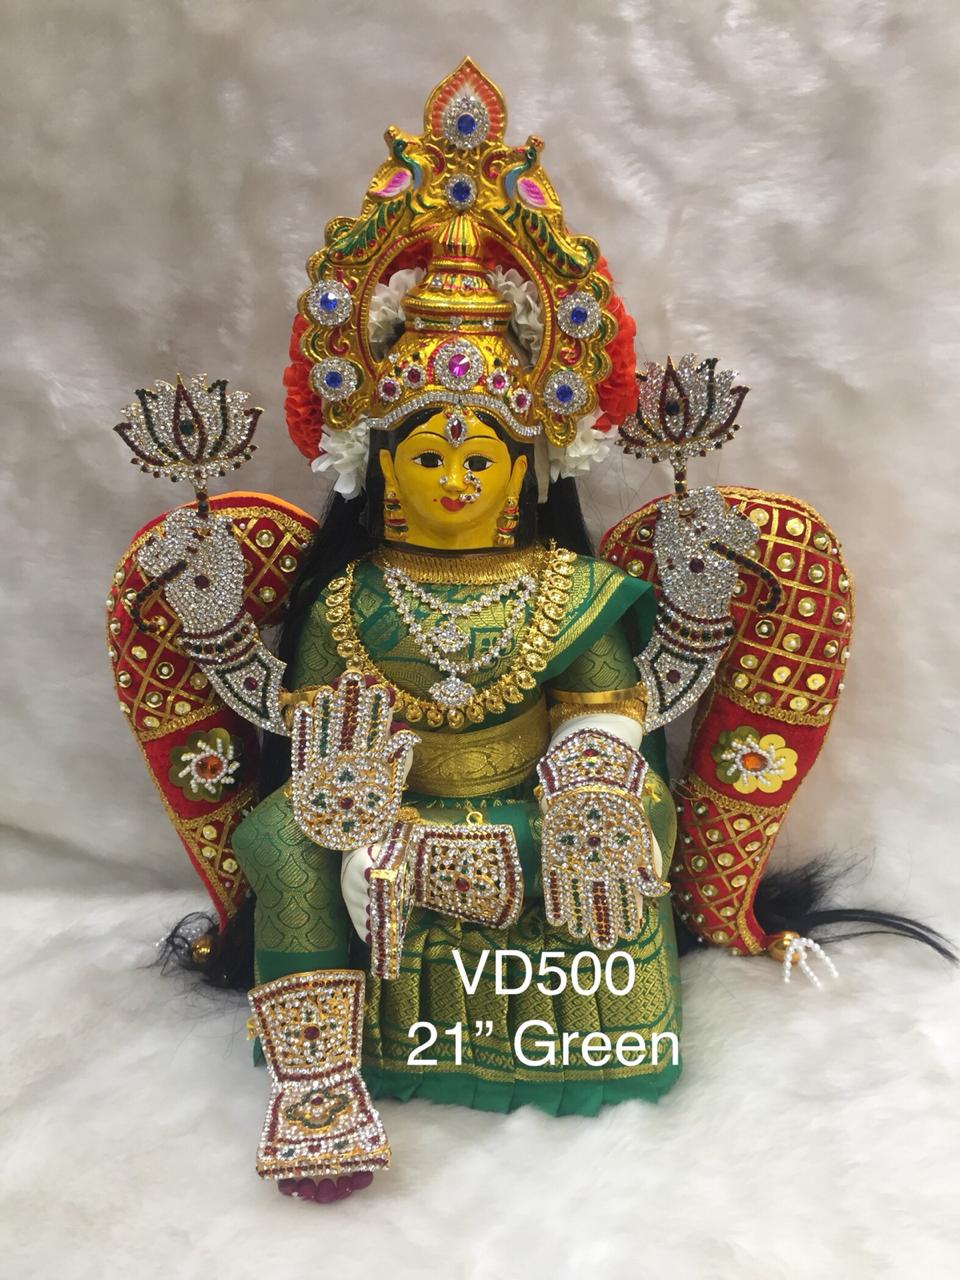 Beautiful Varalakshmi Vratham pooja doll adorned with flowers, symbolizing abundance and blessings.